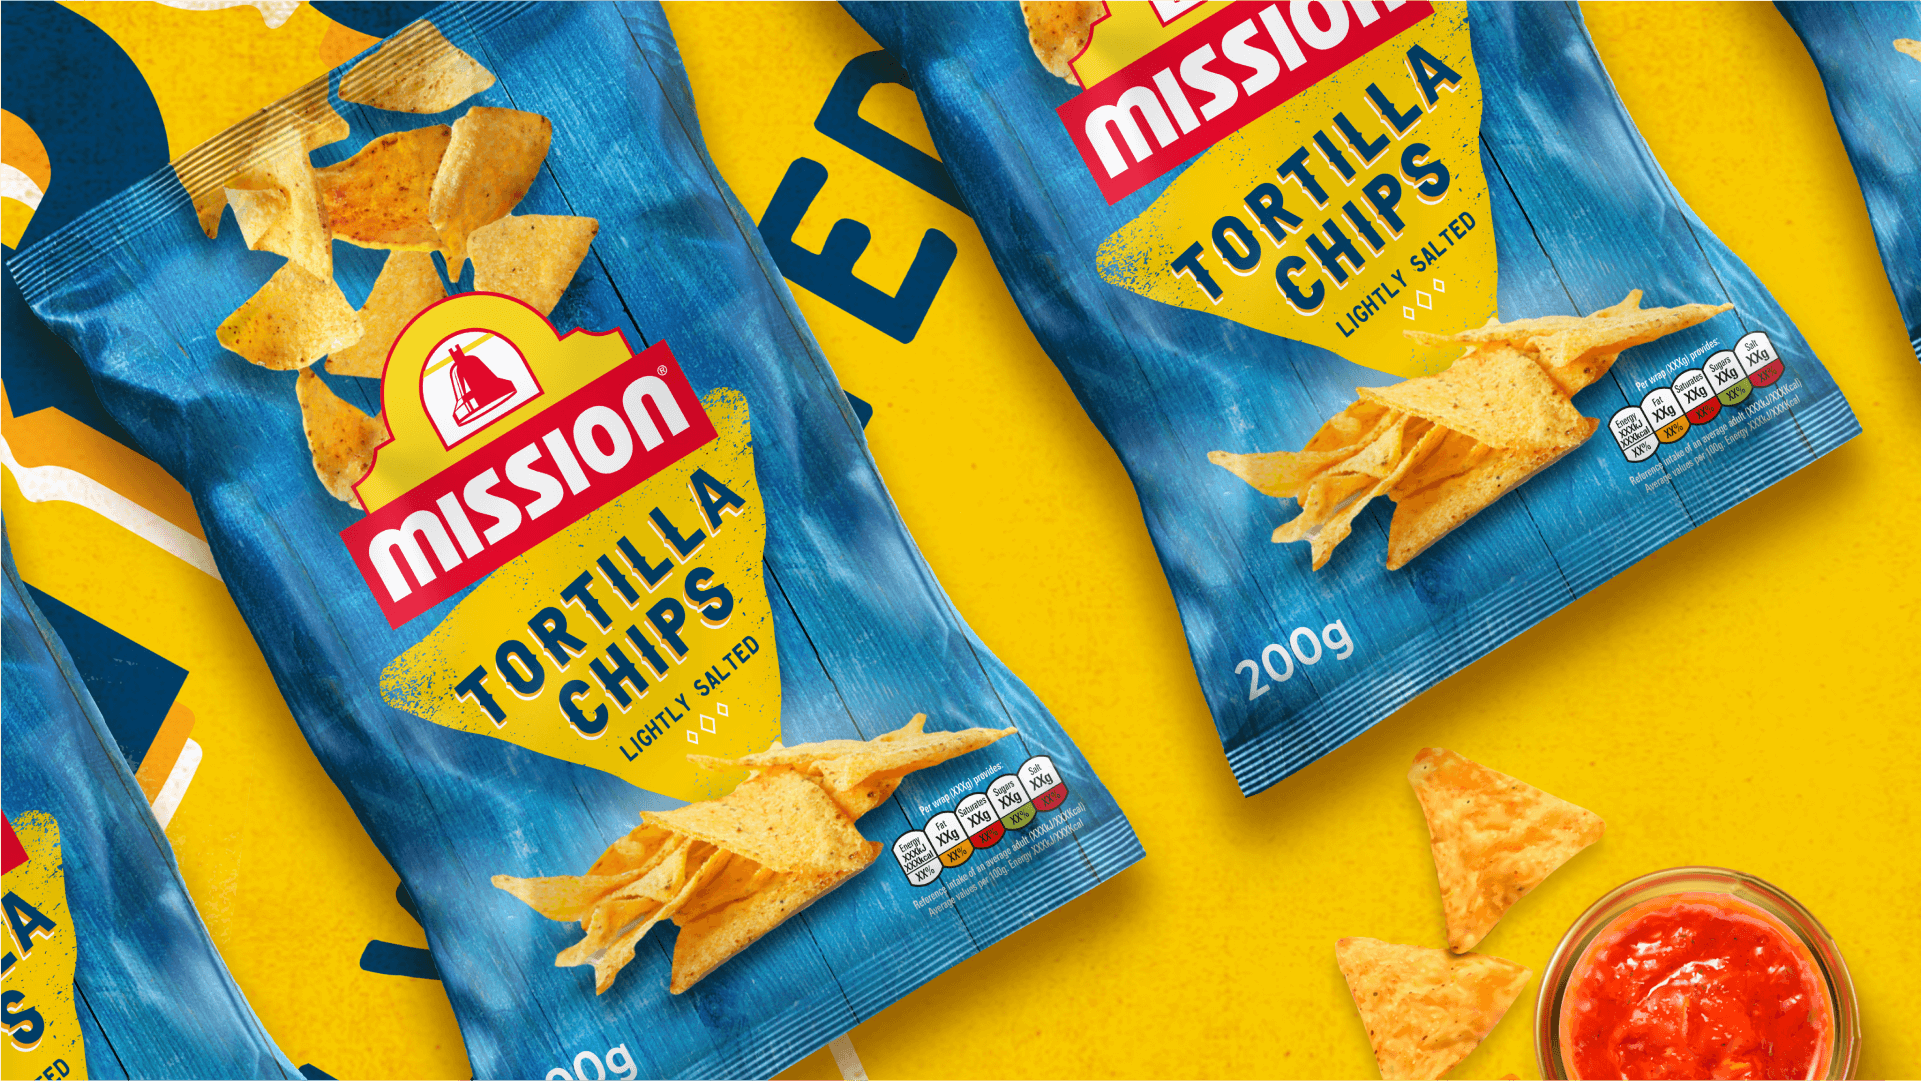 Mission tortilla chips